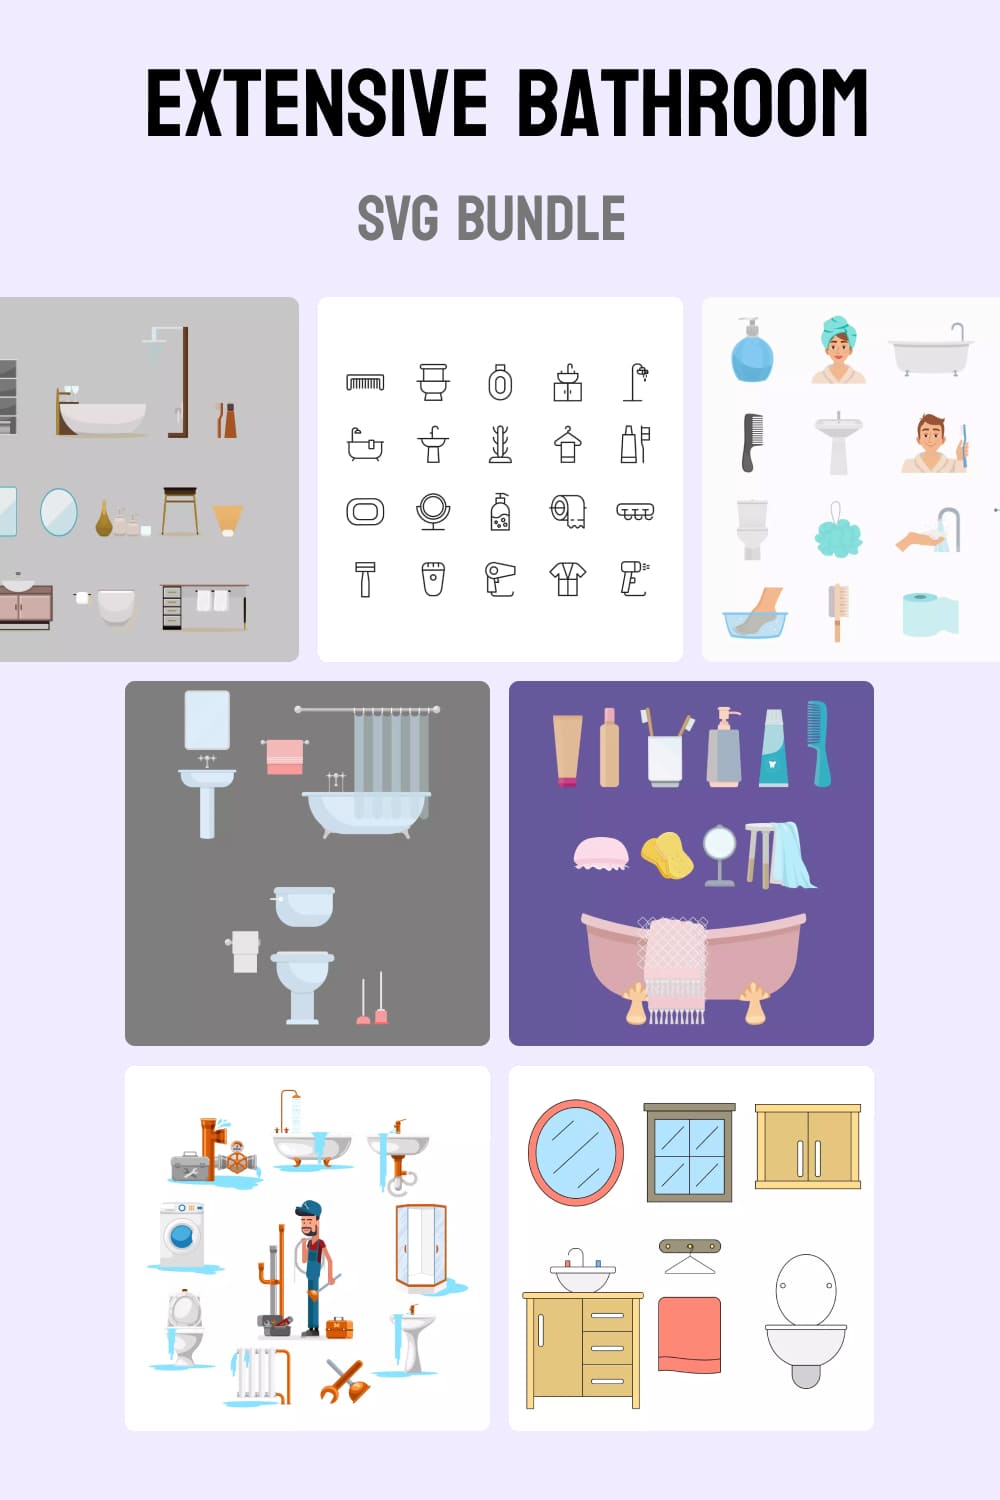 Extensive Bathroom SVG Bundle Pinterest.